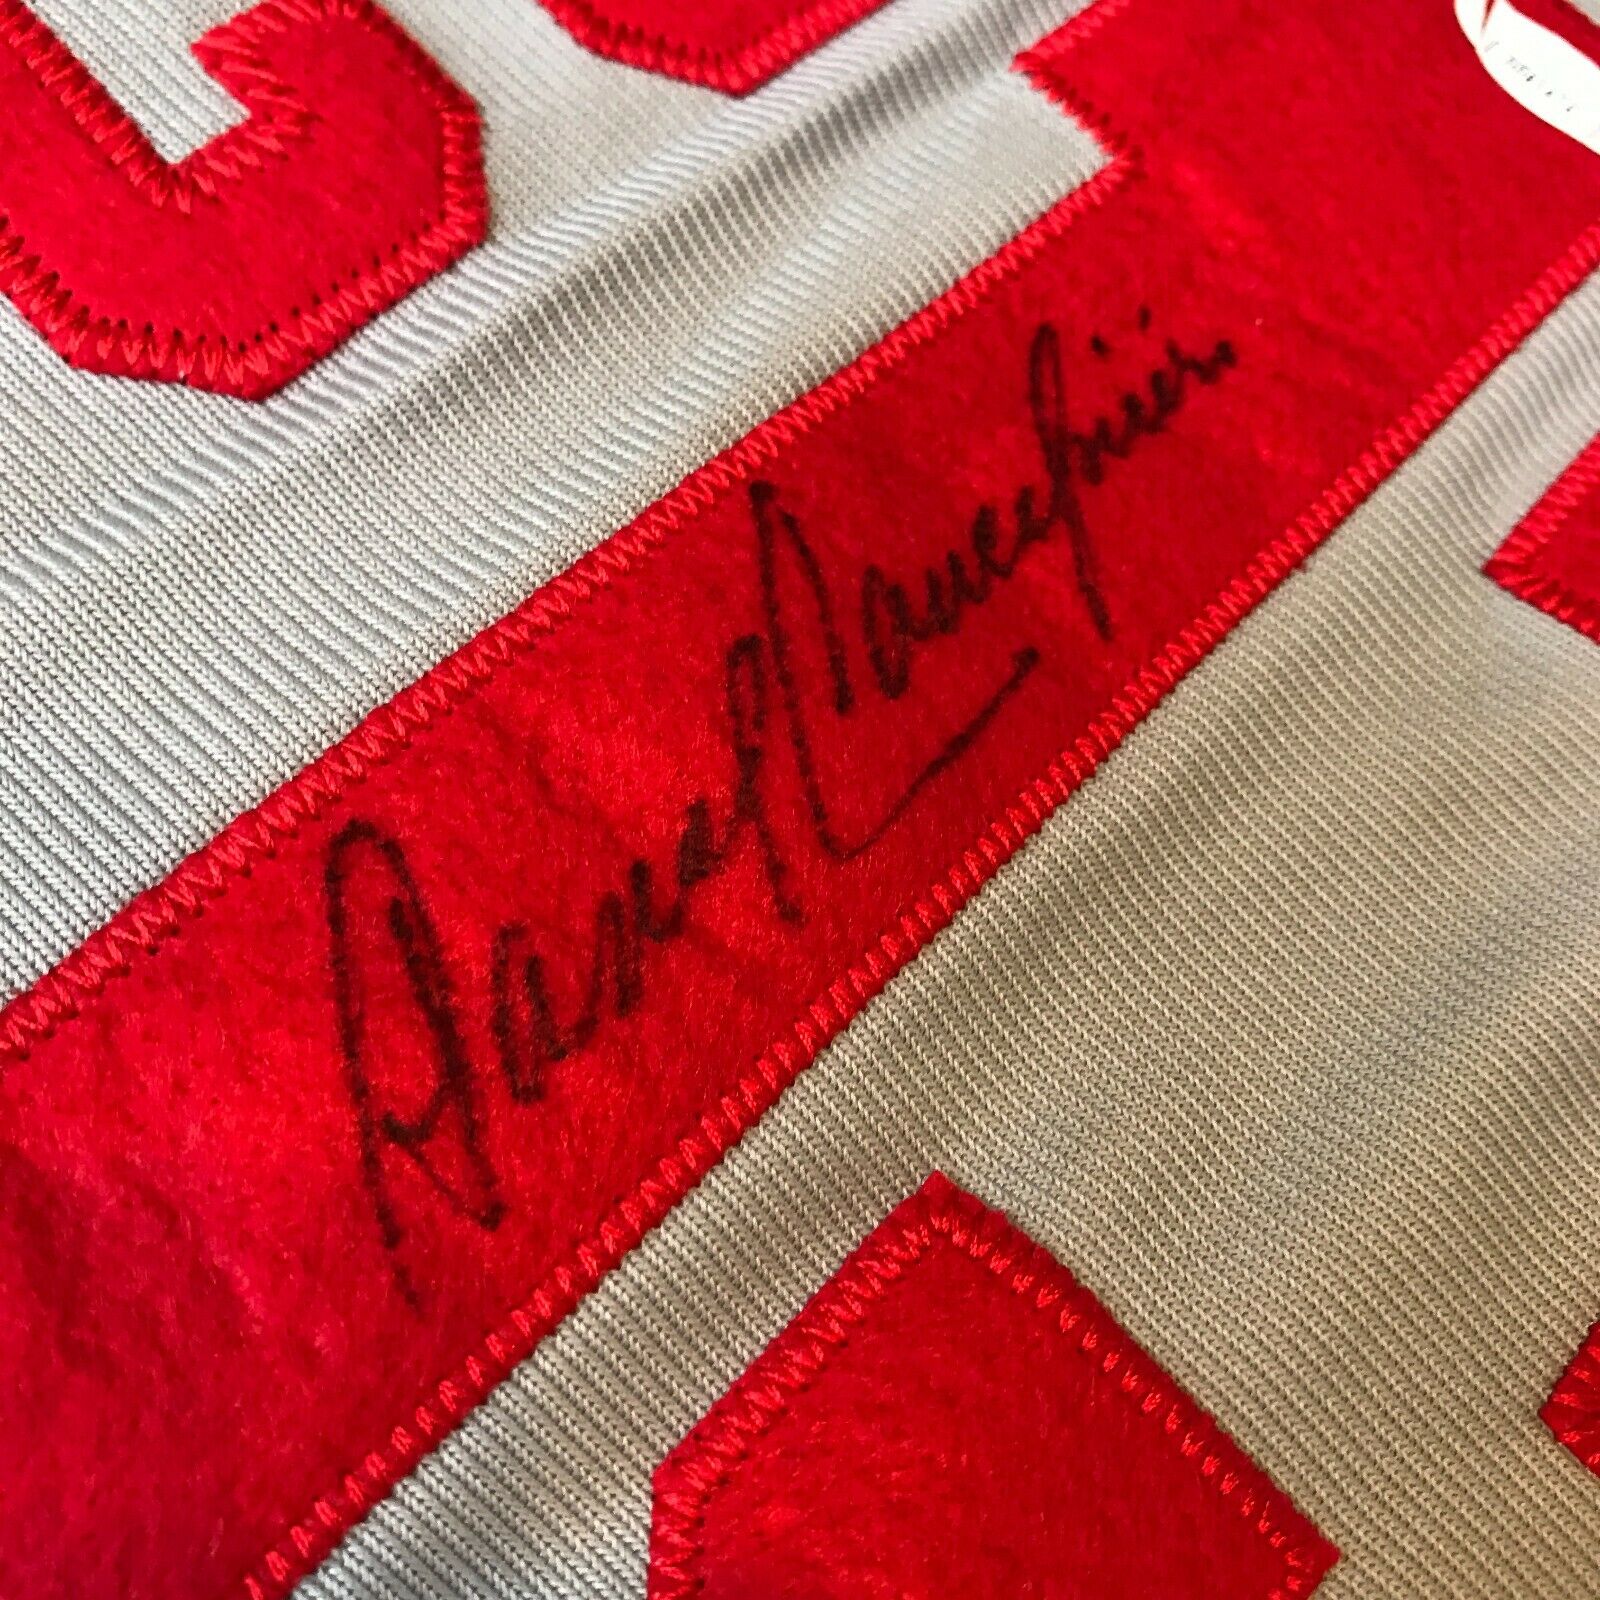 Dave Concepcion Signed 1976 Cincinnati Reds Mitchell & Ness Jersey JSA —  Showpieces Sports